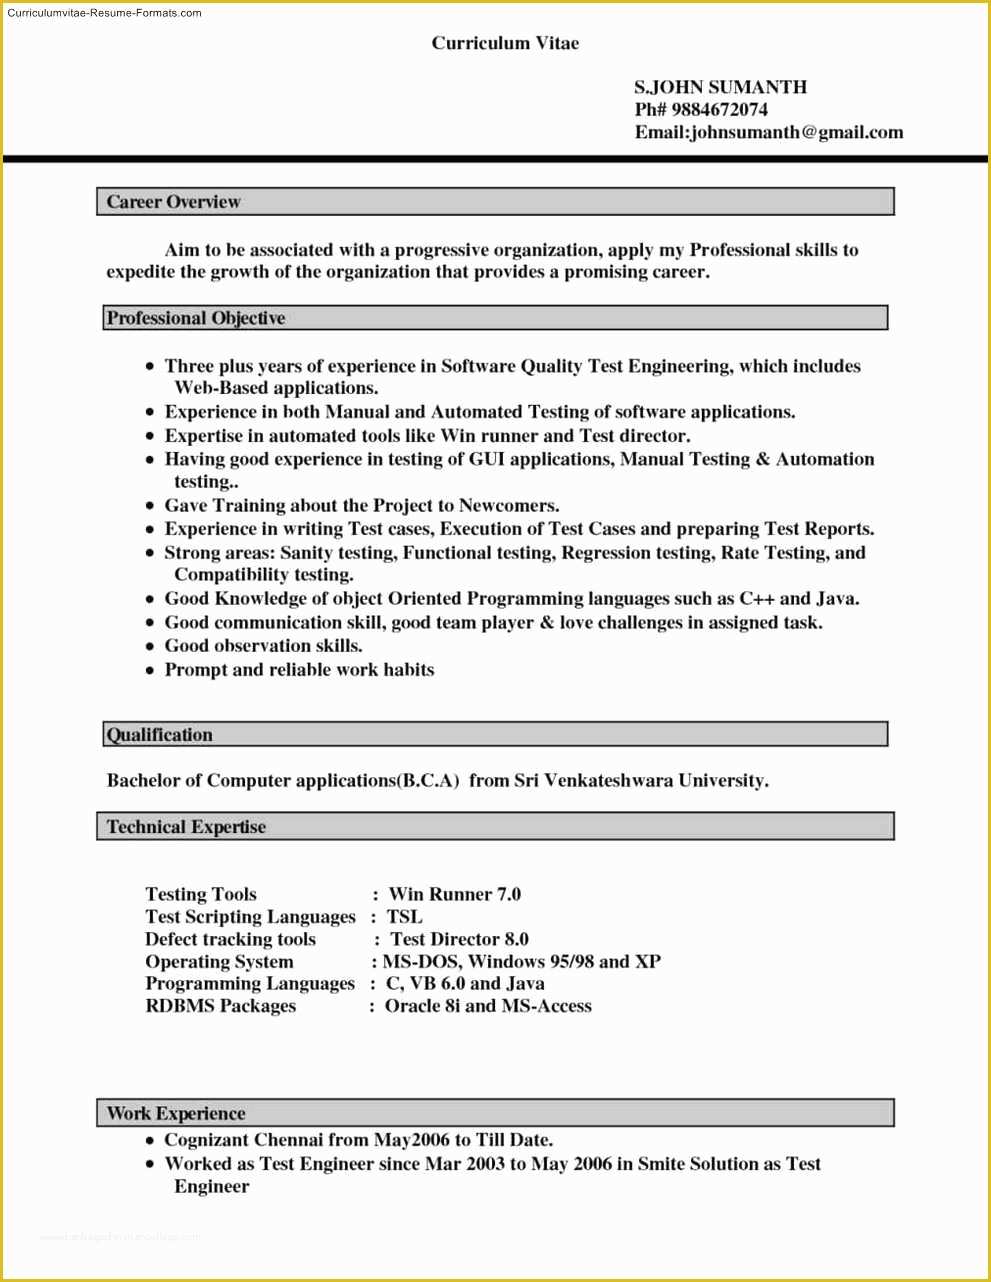 Free Resume Templates Microsoft Word 2007 Of Teacher Resume Templates Microsoft Word 2007 Template Free